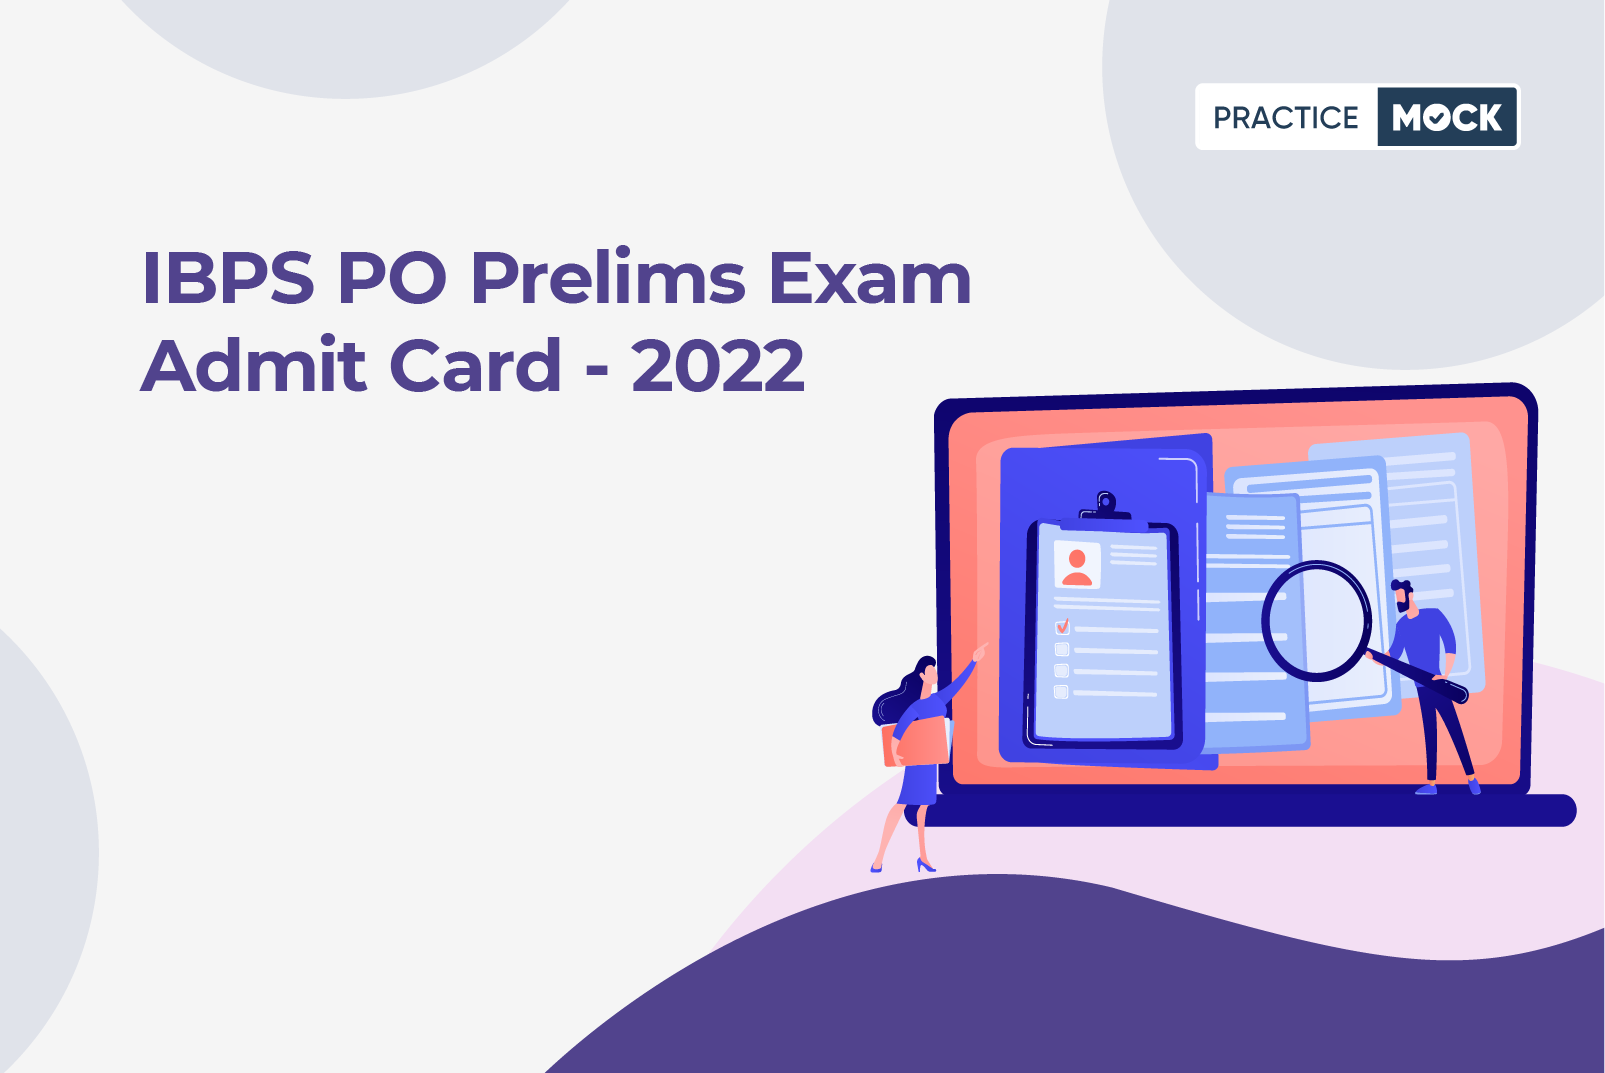 IBPS PO Prelims Exam Admit Card 2022 PracticeMock